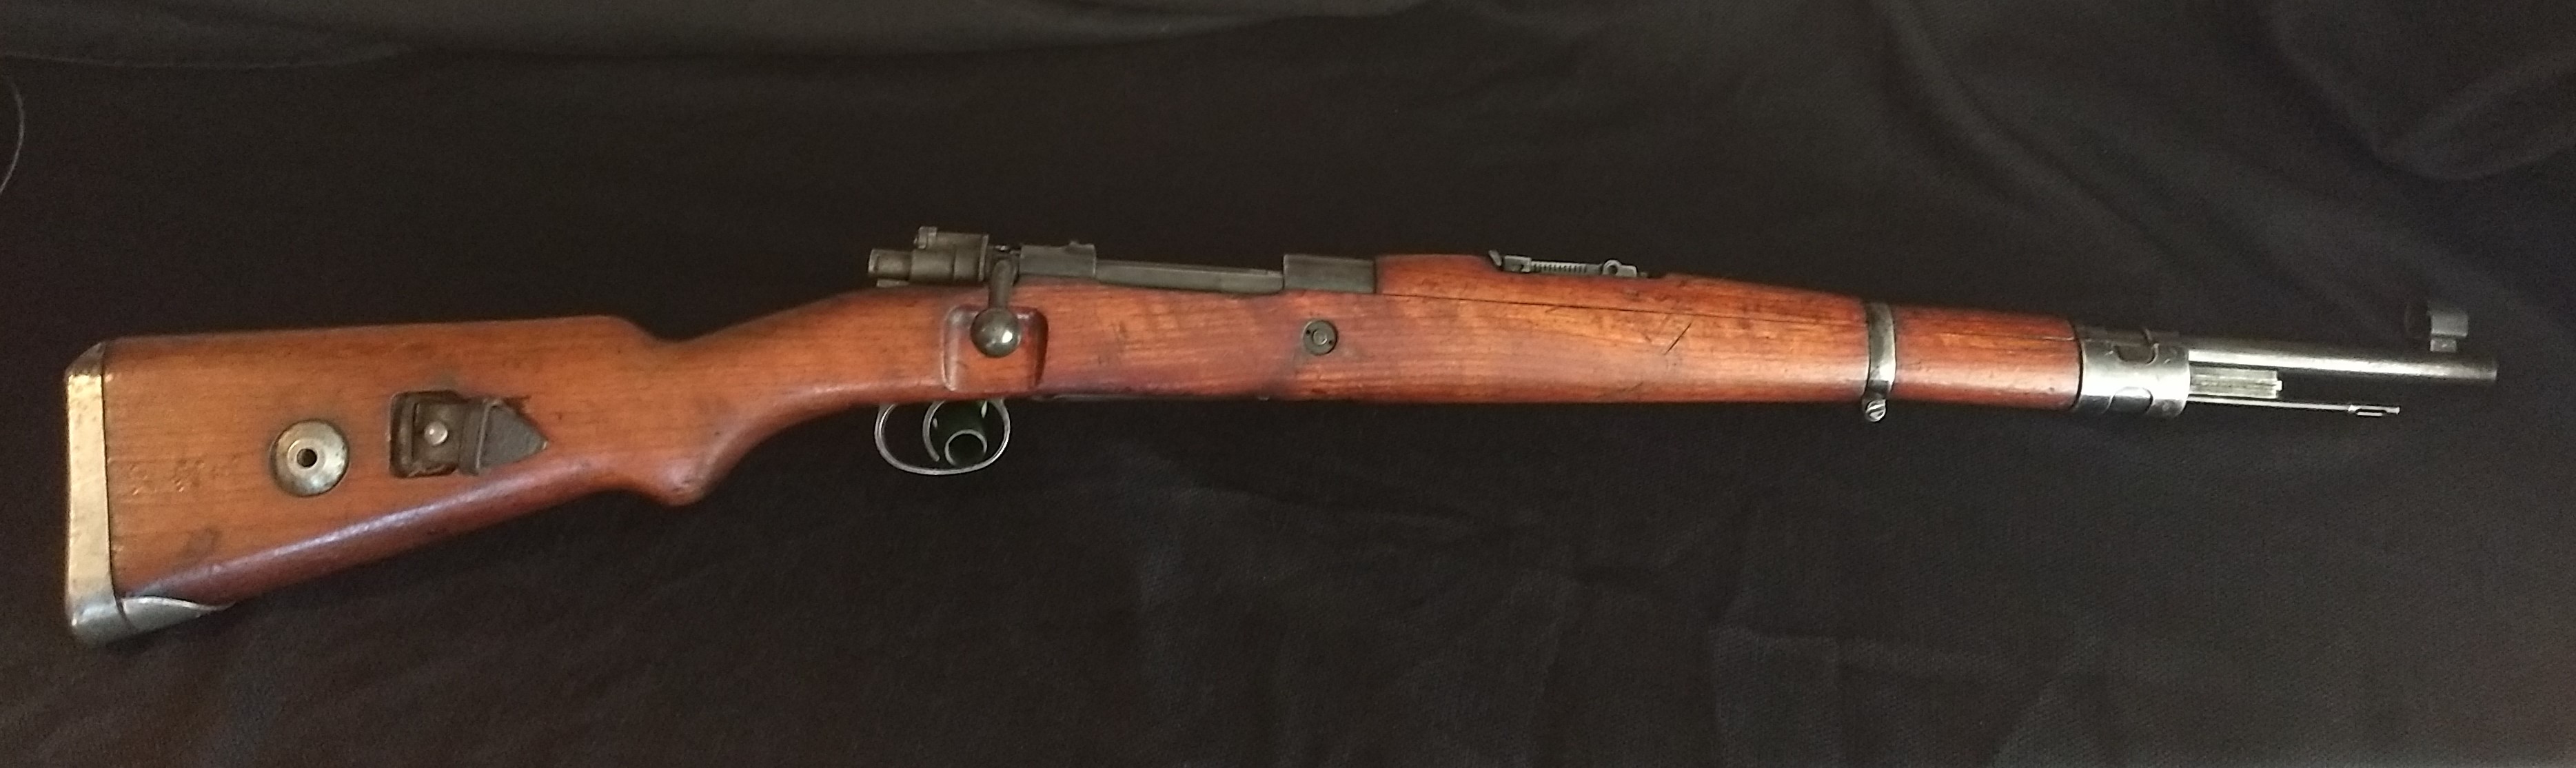 german mauser rifle value